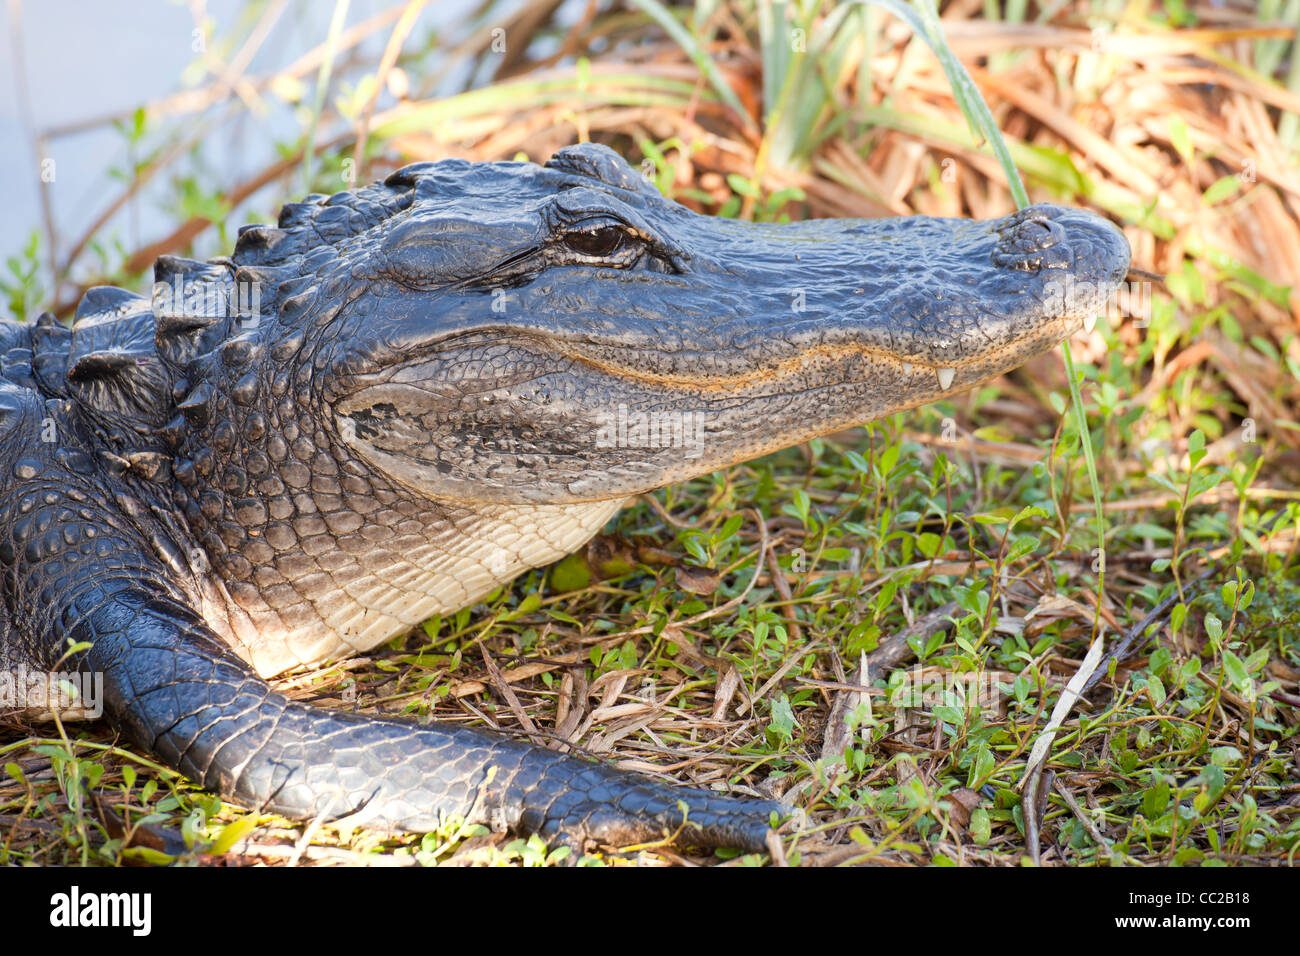 American alligator (Alligator mississippiensis), Everglades National Park, Florida, USA Stock Photo